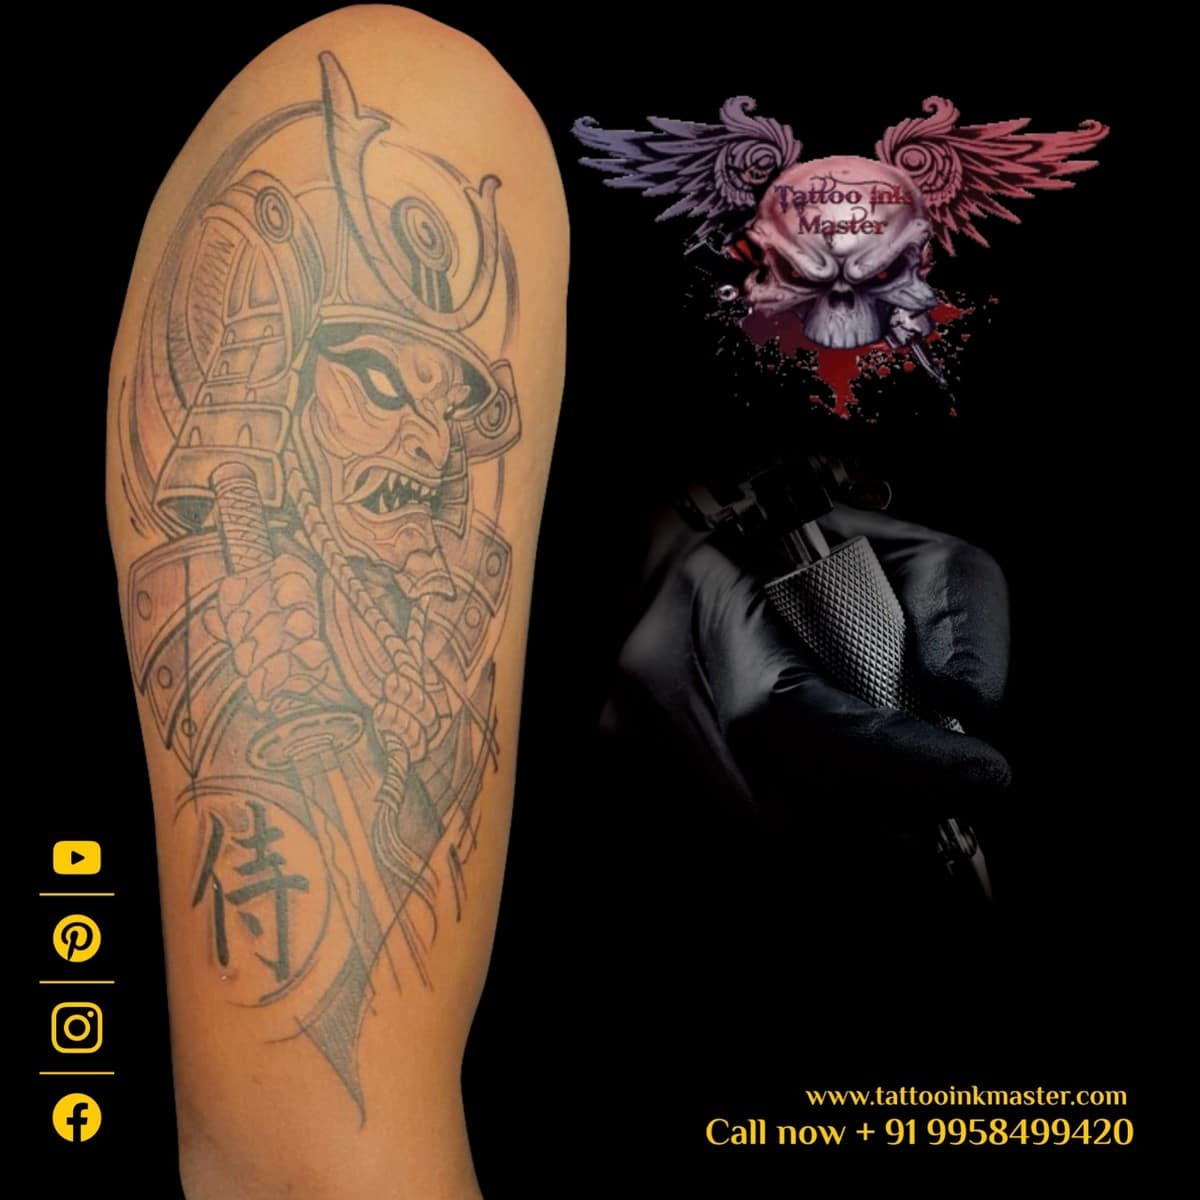 Awesome floral tattoo by John Hintz of Warrior Tattoo Studio in Iowa, USA!  : r/tattoos